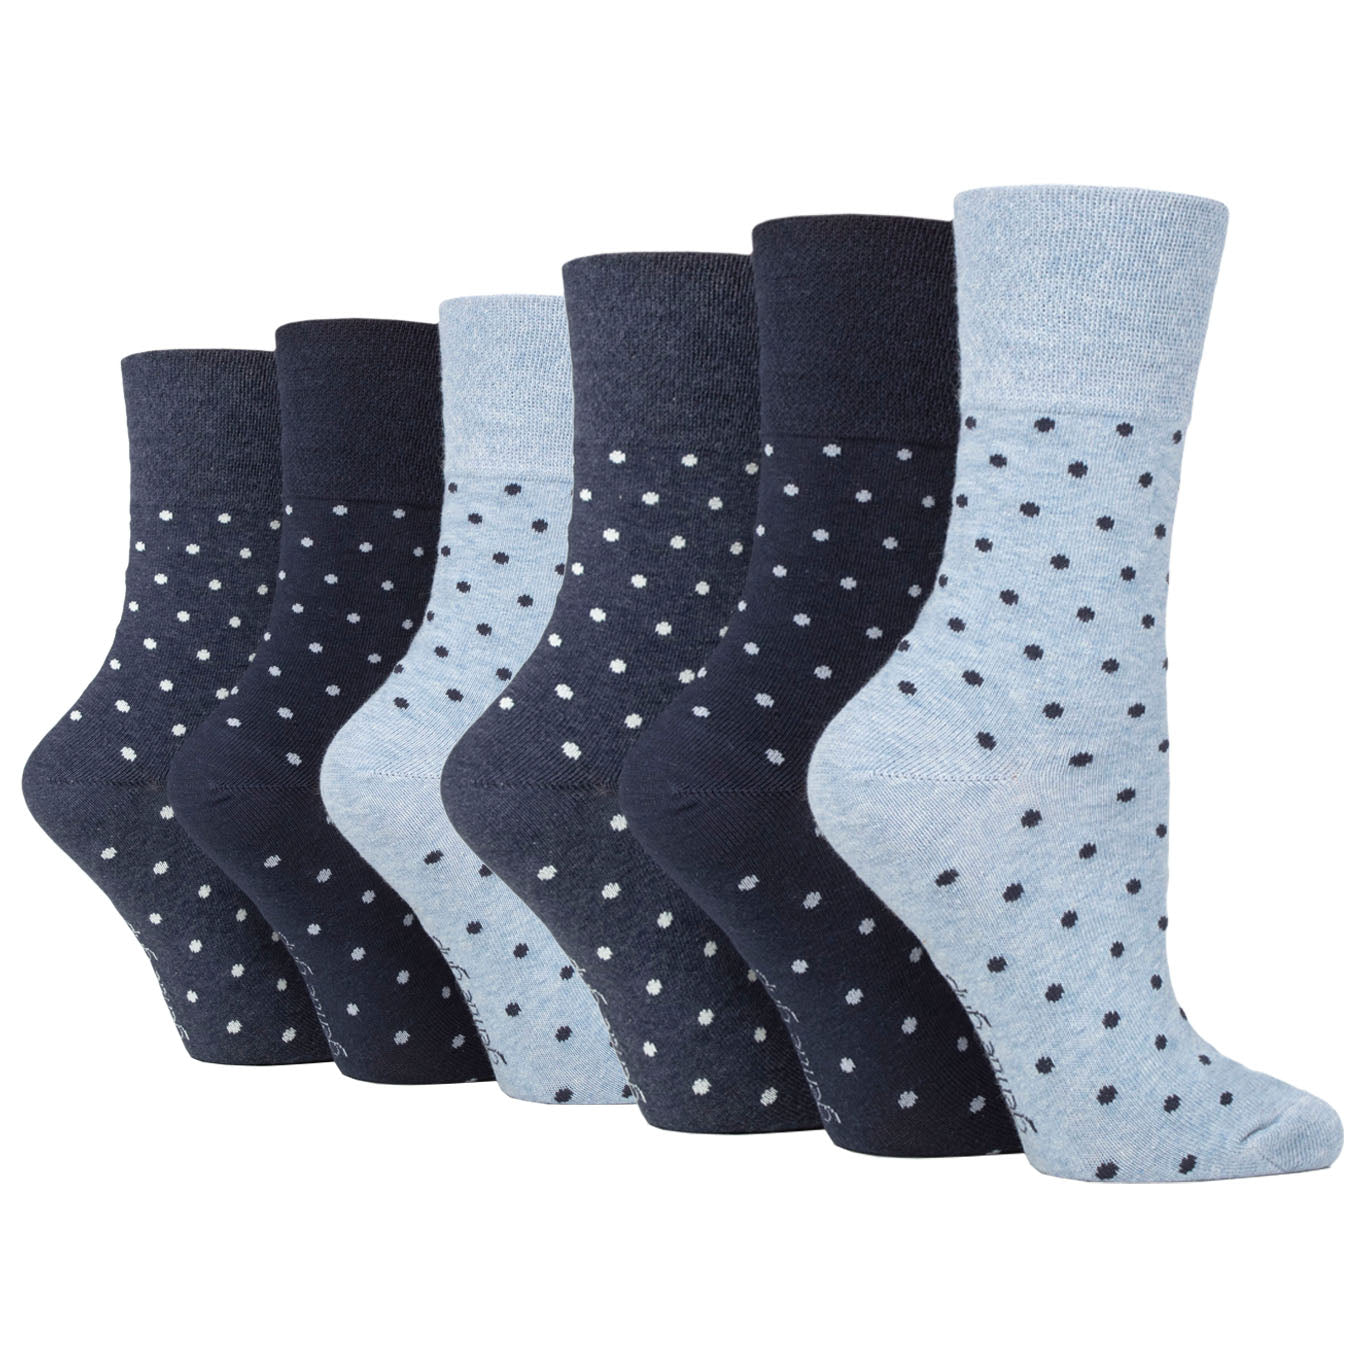 6 Pairs Ladies Gentle Grip Cotton Socks Digital Dots Dots Navy/Denim